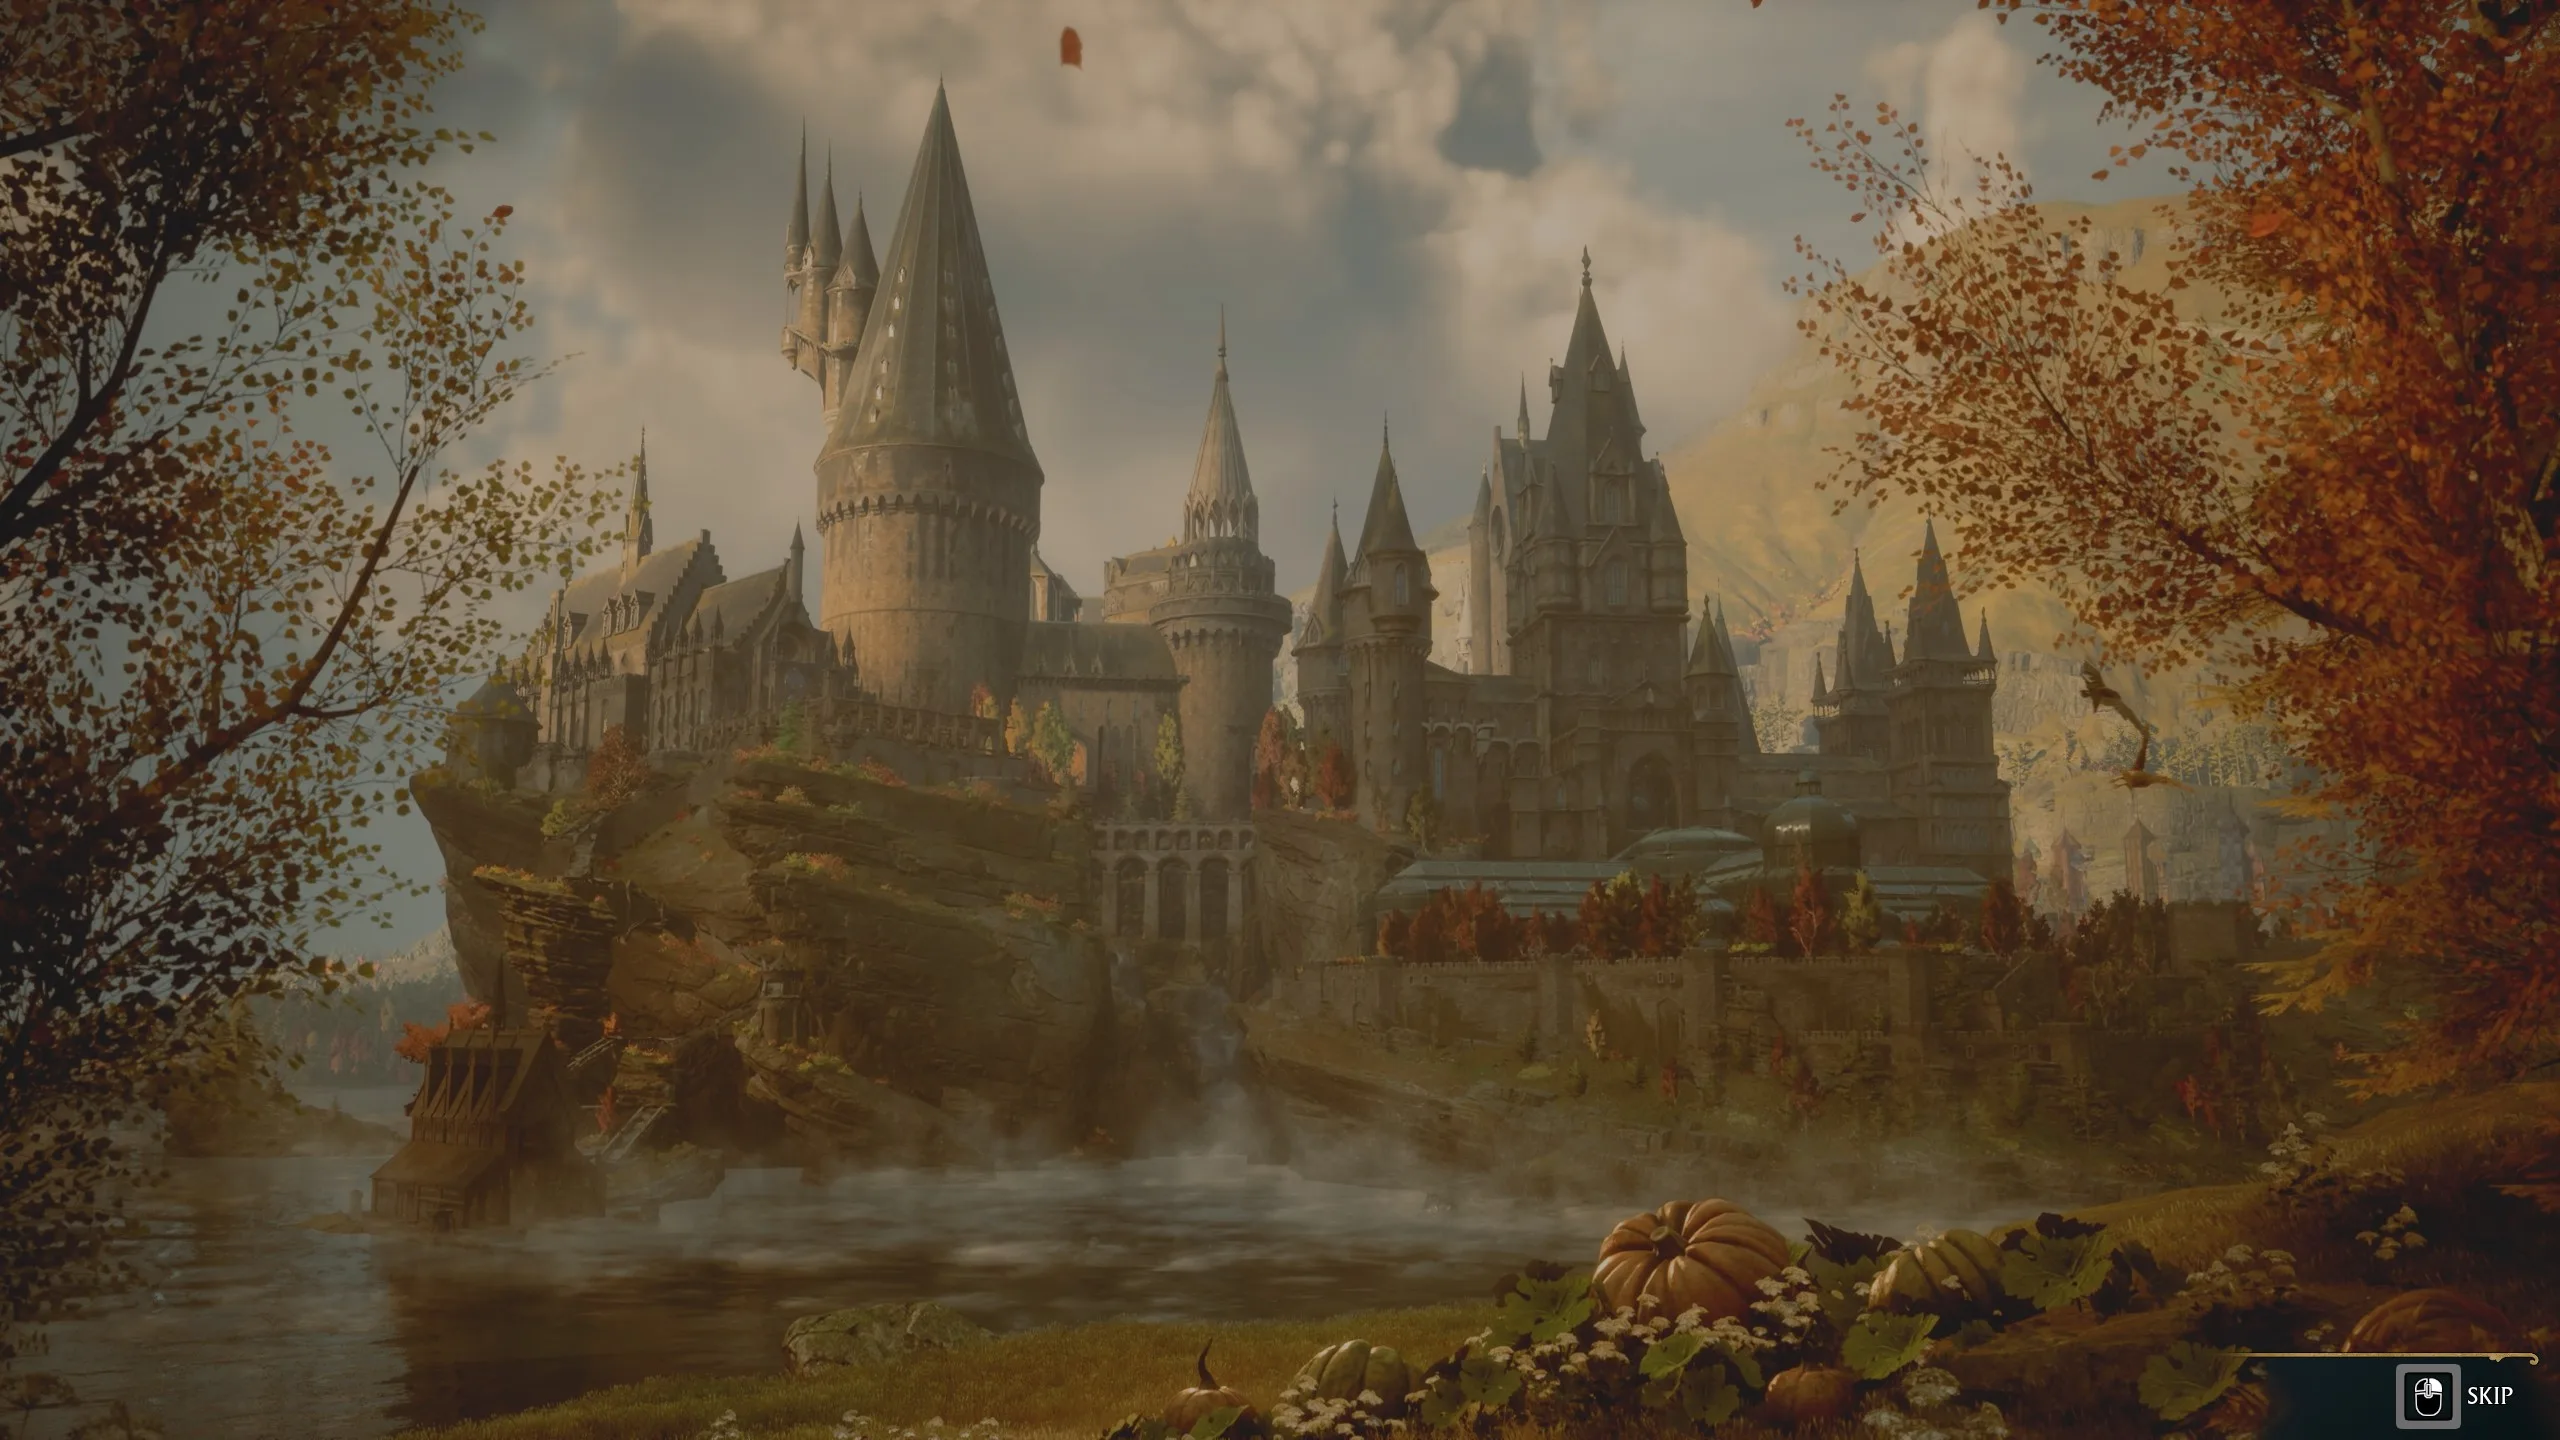 Hogwarts Legacy, PS5 - Xbox Series S, X - PC